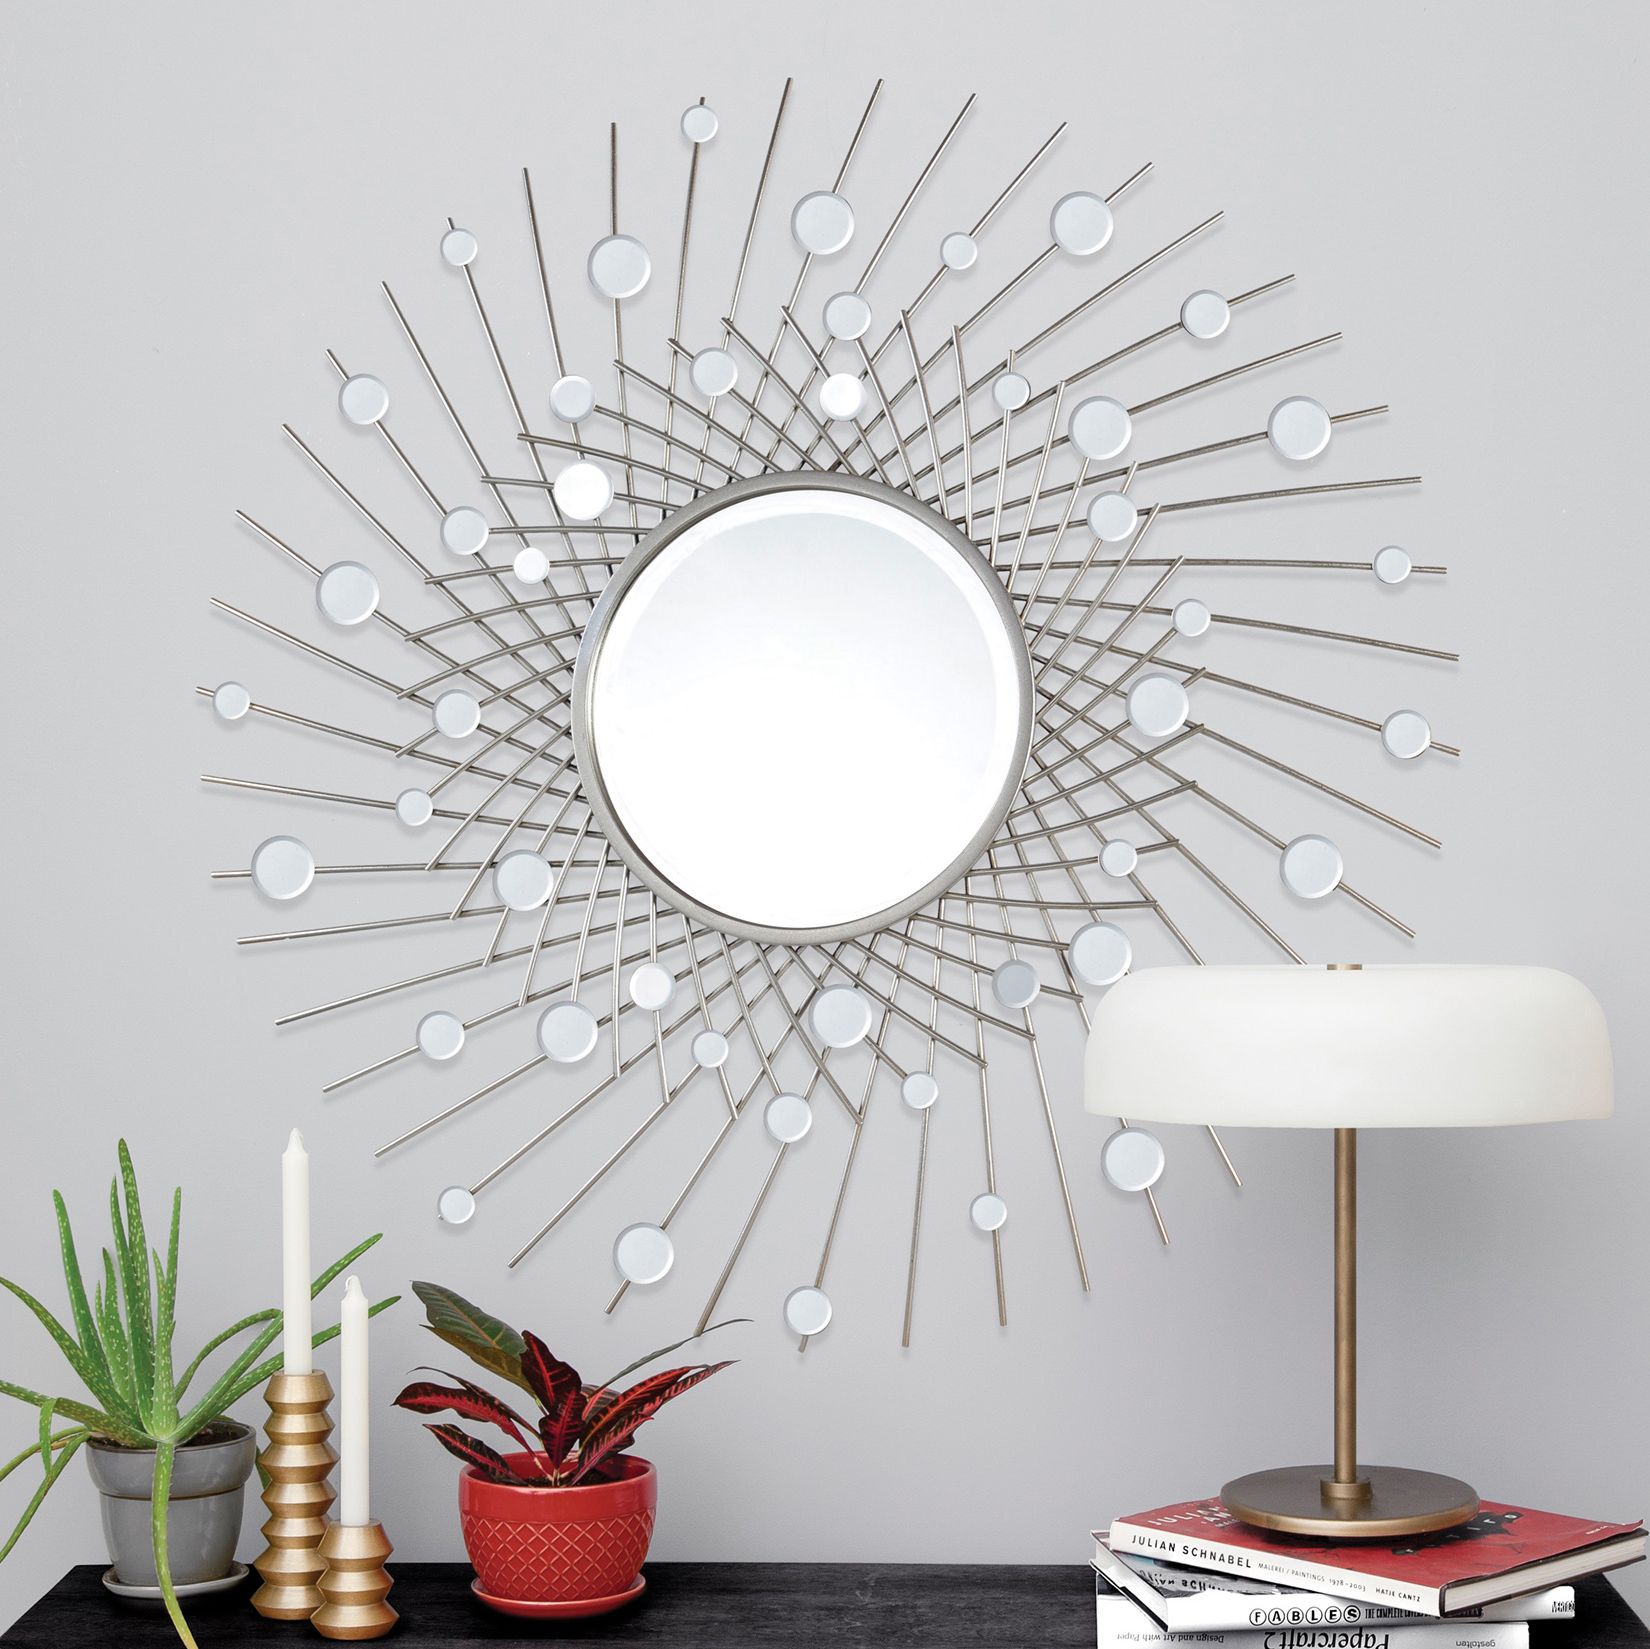 sunburst wall mirror